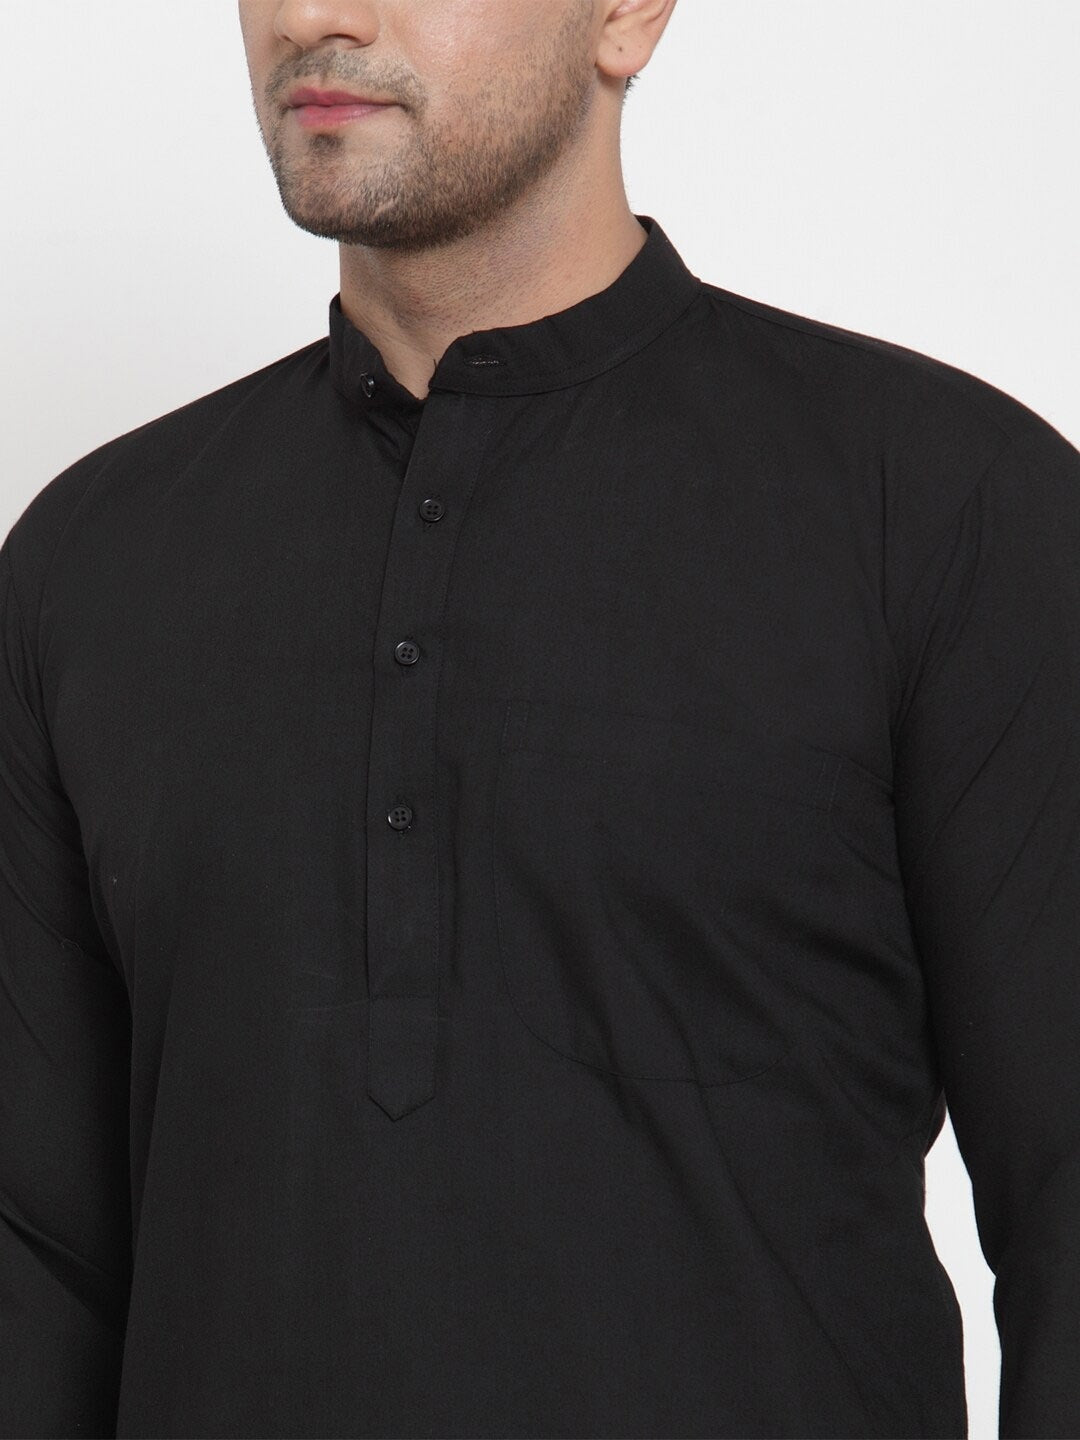 Men's Black Cotton Solid Kurta Only ( Ko 611 Black ) - Virat Fashions